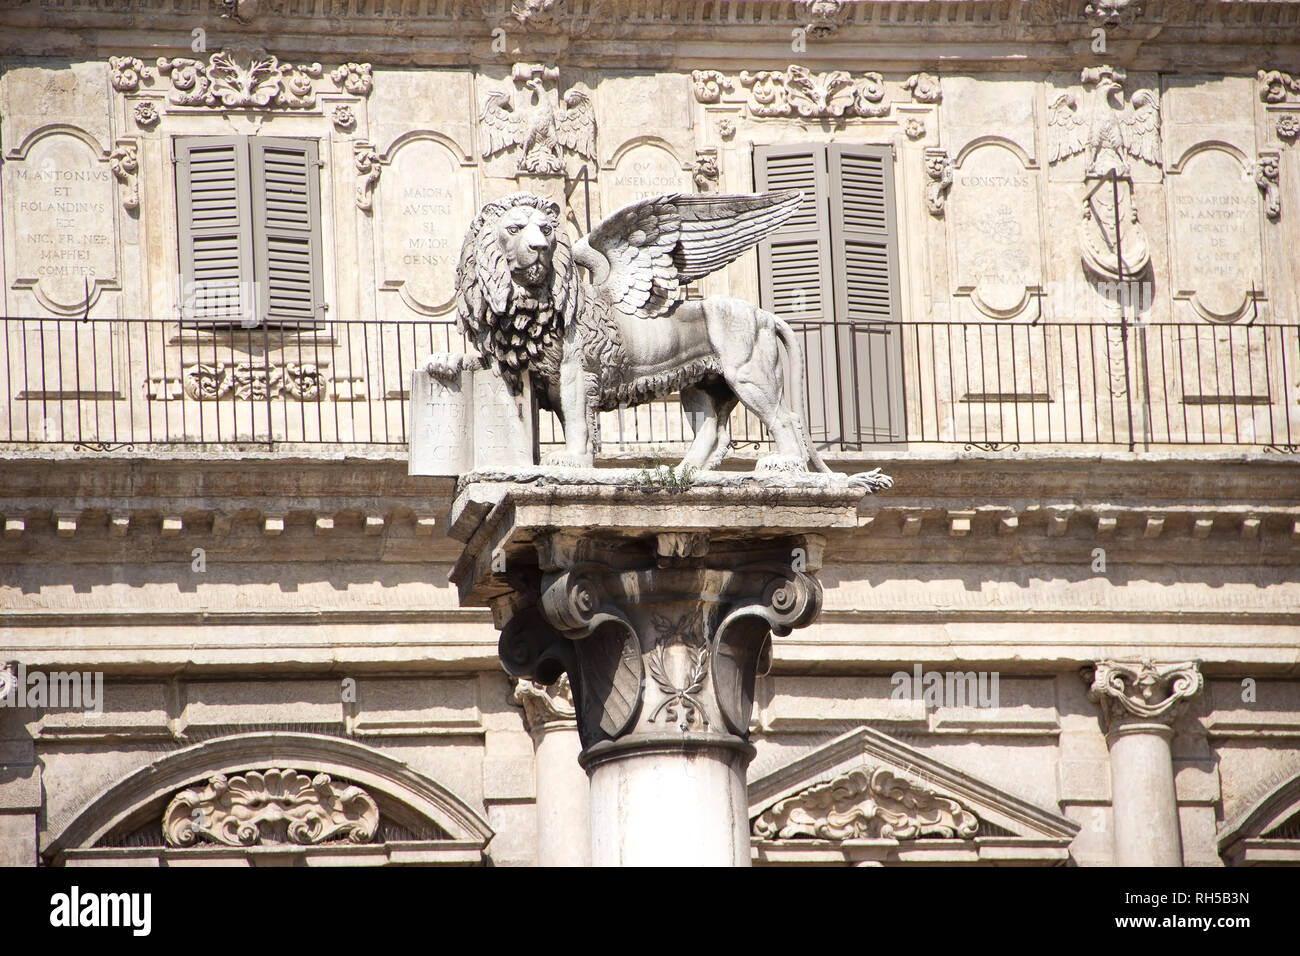 The lion of saint Marco statue in Verona, The lion represents the Serenissima, the Republic of Venice Stock Photo